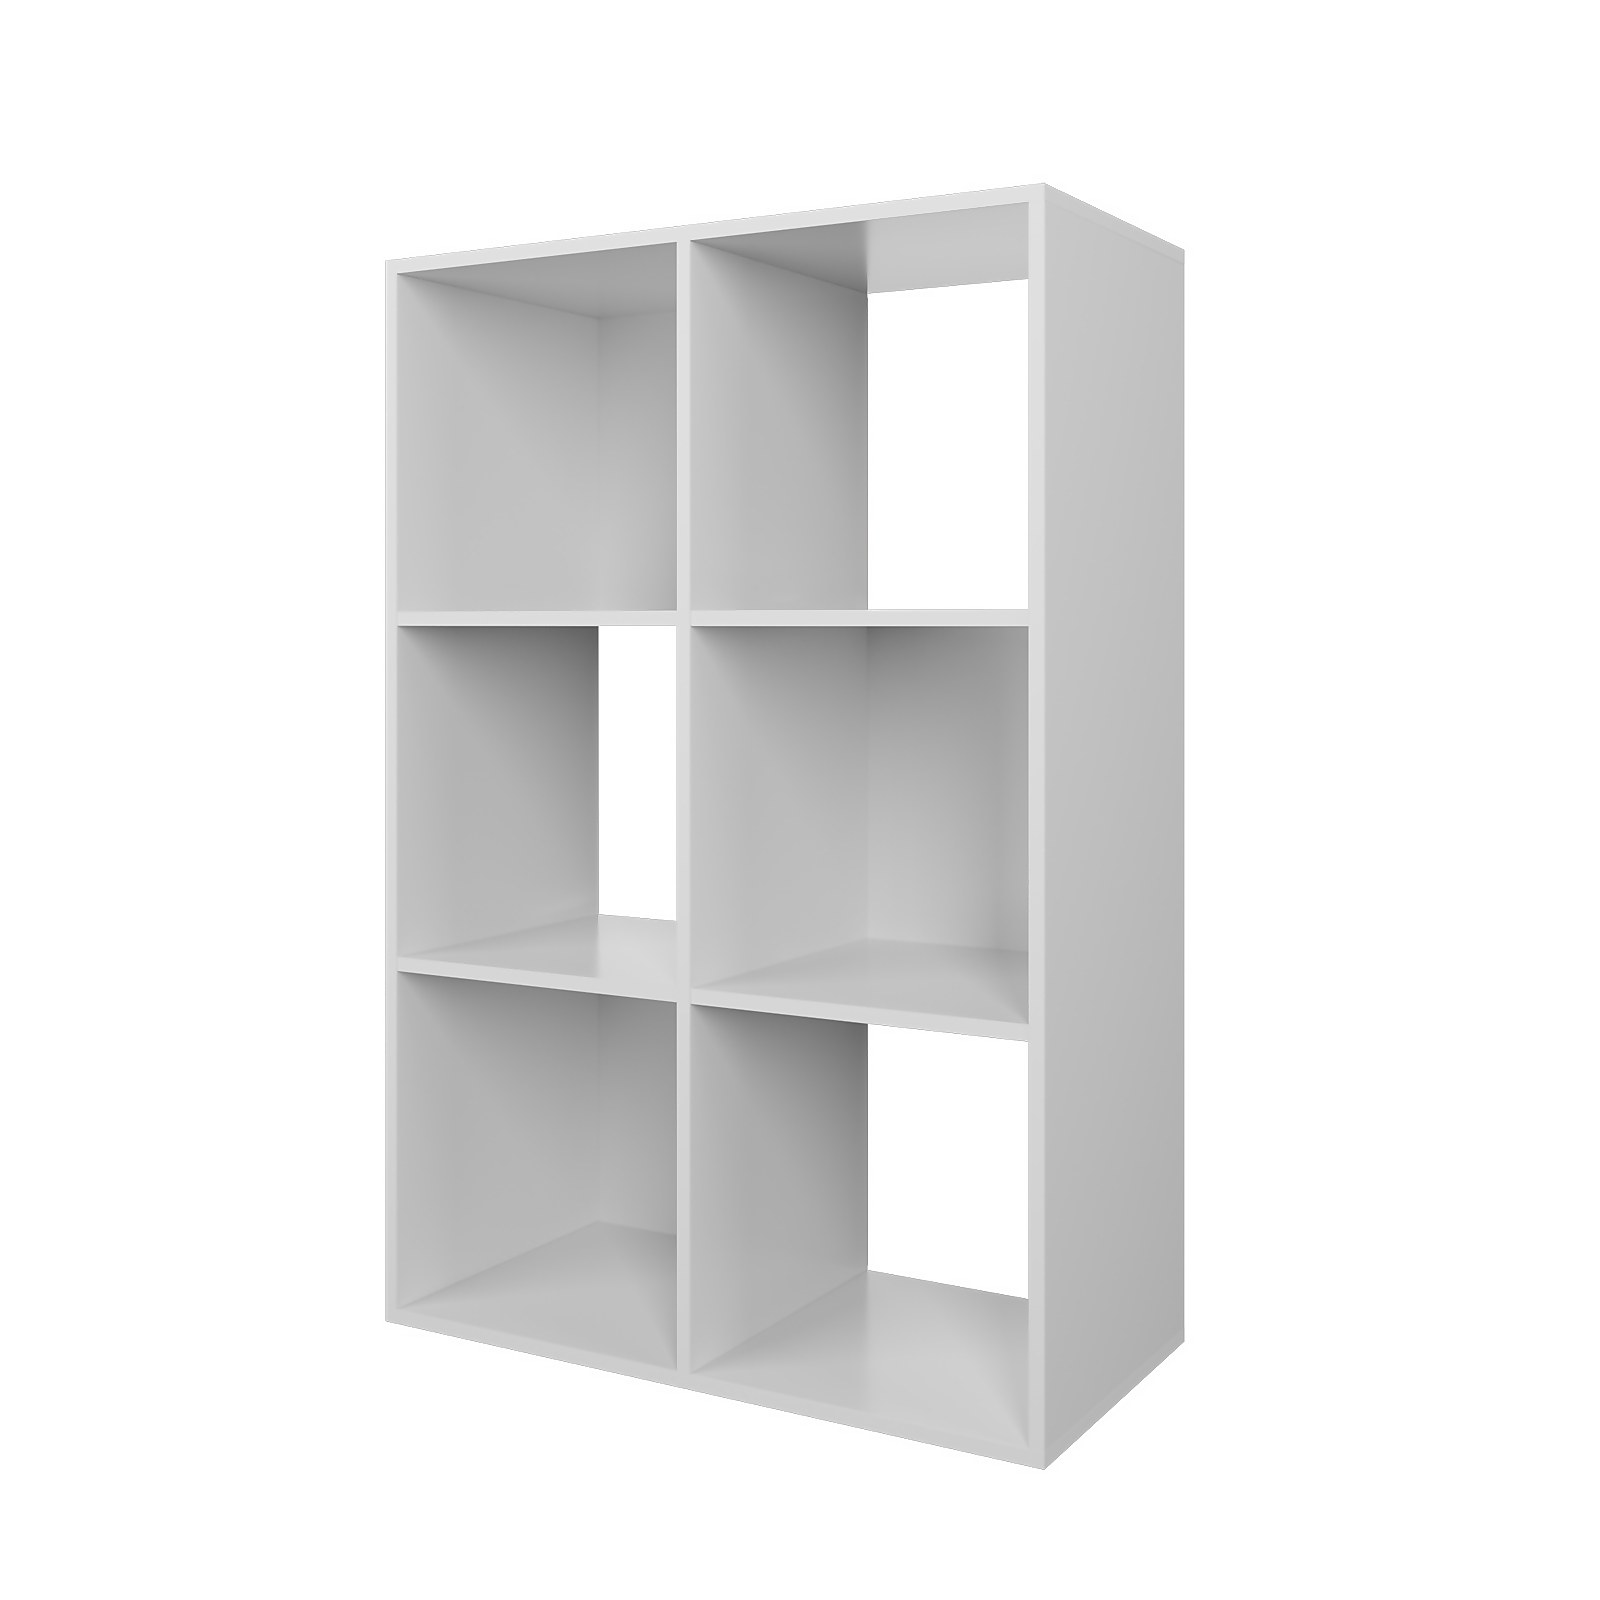 Photo of Compact Cube 3x2 Storage Unit - White